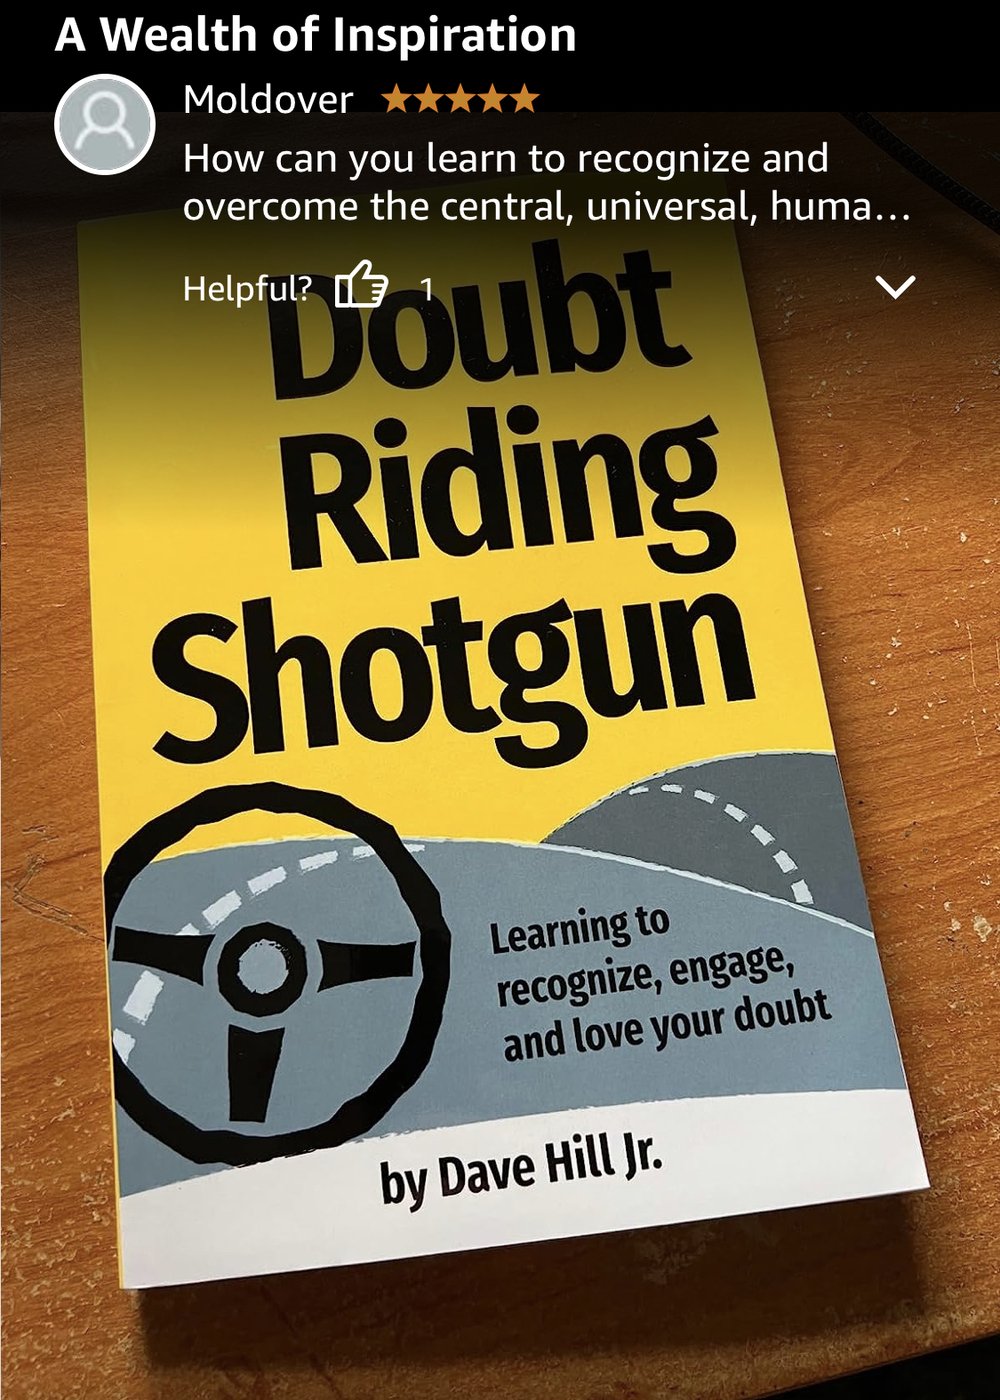 Doubt-Riding_Shotgun_book-review-A-Wealth-of-Inspiration -Moldover★★★★★.jpeg